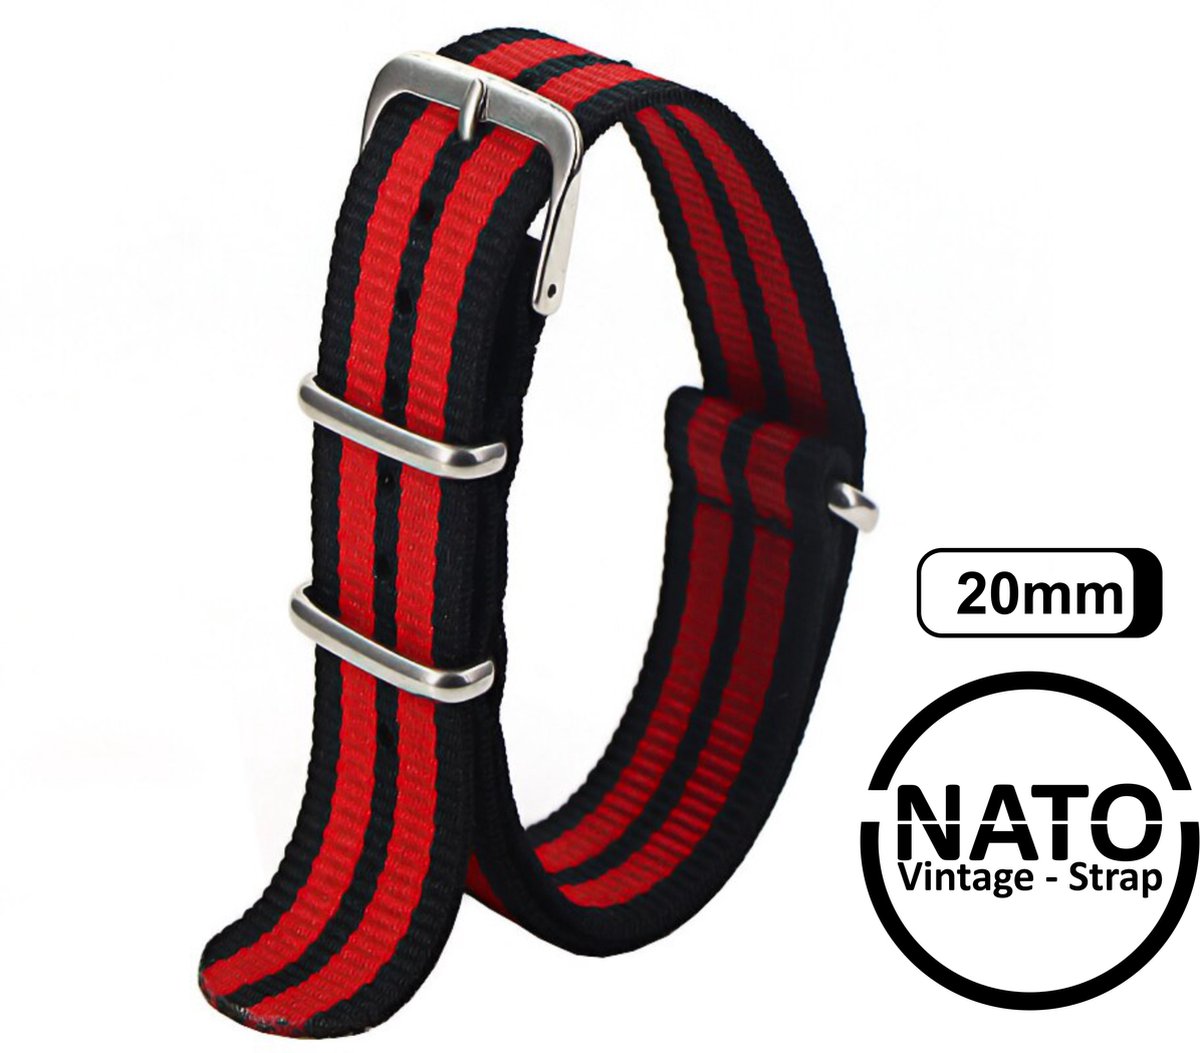 20mm Nato Strap Zwart Rood Gestreept - Vintage James Bond - Nato Strap collectie - Mannen - Horlogebanden - 20 mm bandbreedte voor oa. Seiko Rolex Omega Casio en Citizen